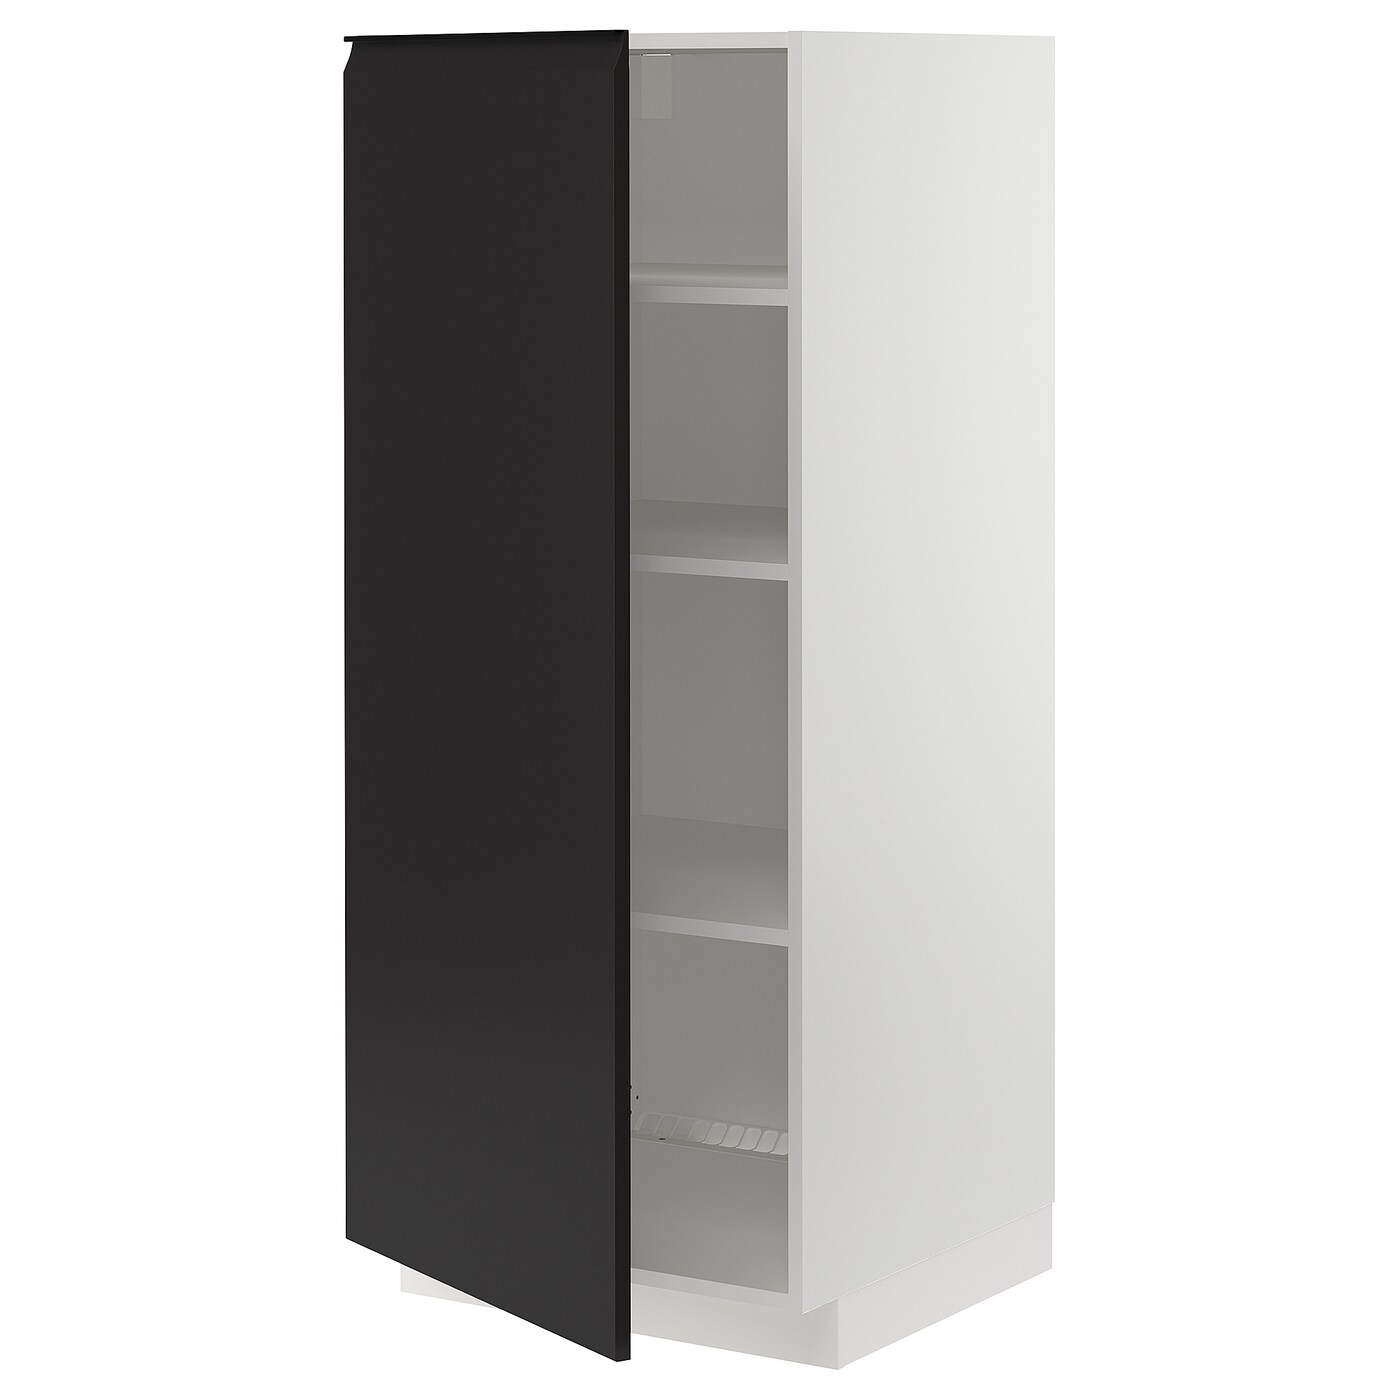 Высокий кухонный шкаф - IKEA METOD/МЕТОД ИКЕА, 140х60х60 см, белый/черный